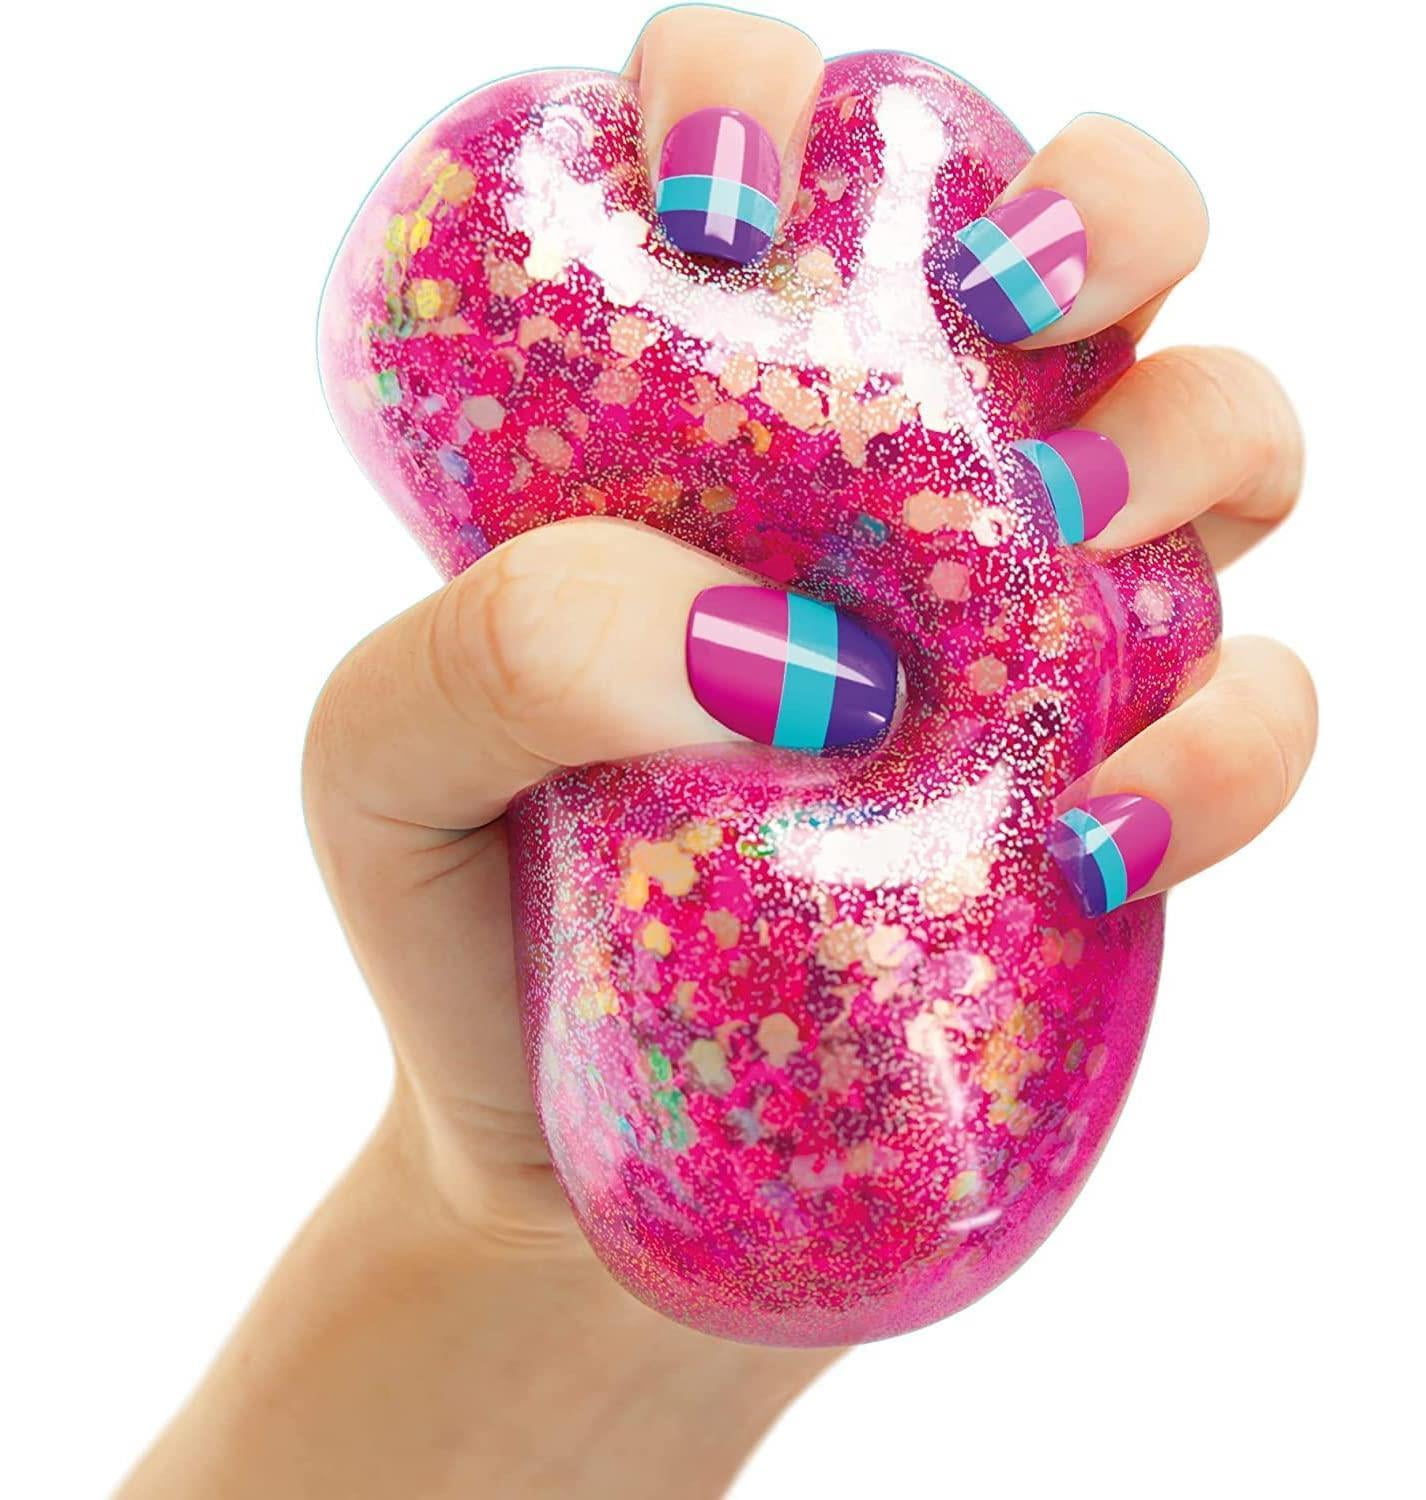 Doctor Squish Squishy Slime Maker Decorate Glitter Station Confetti Sparkles